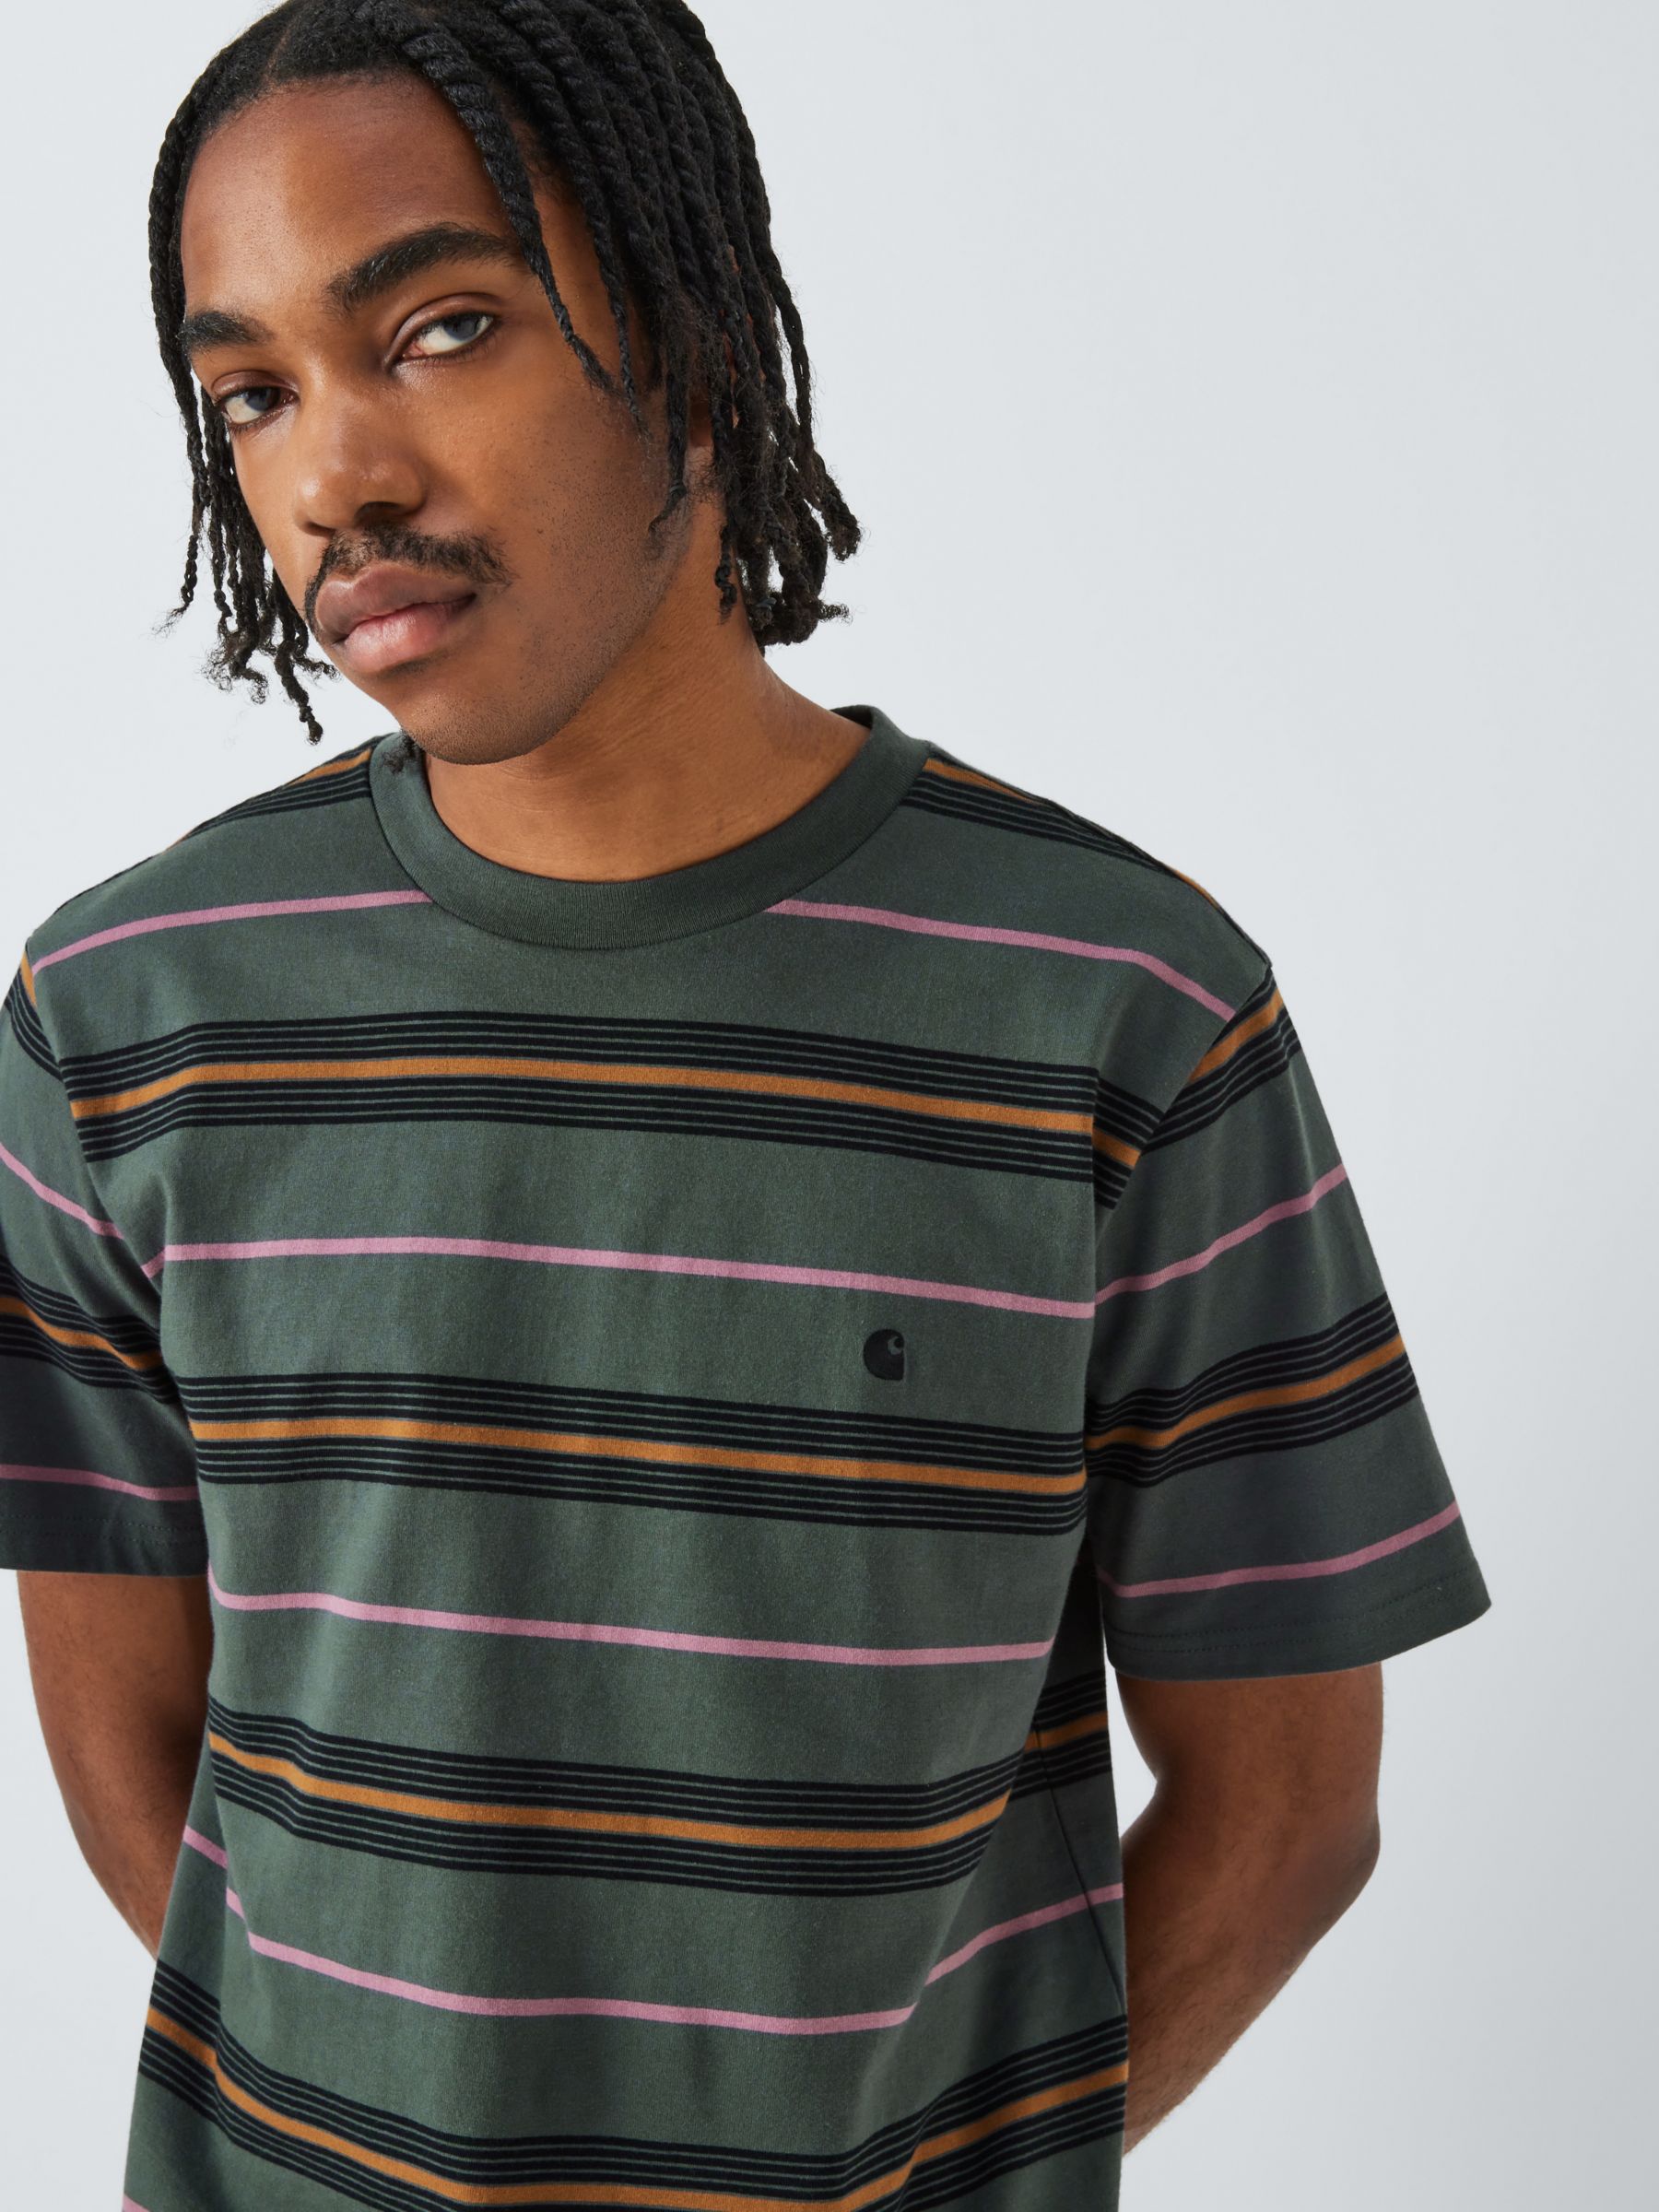 Carhartt WIP Striped Cotton T-Shirt, Multi, XL